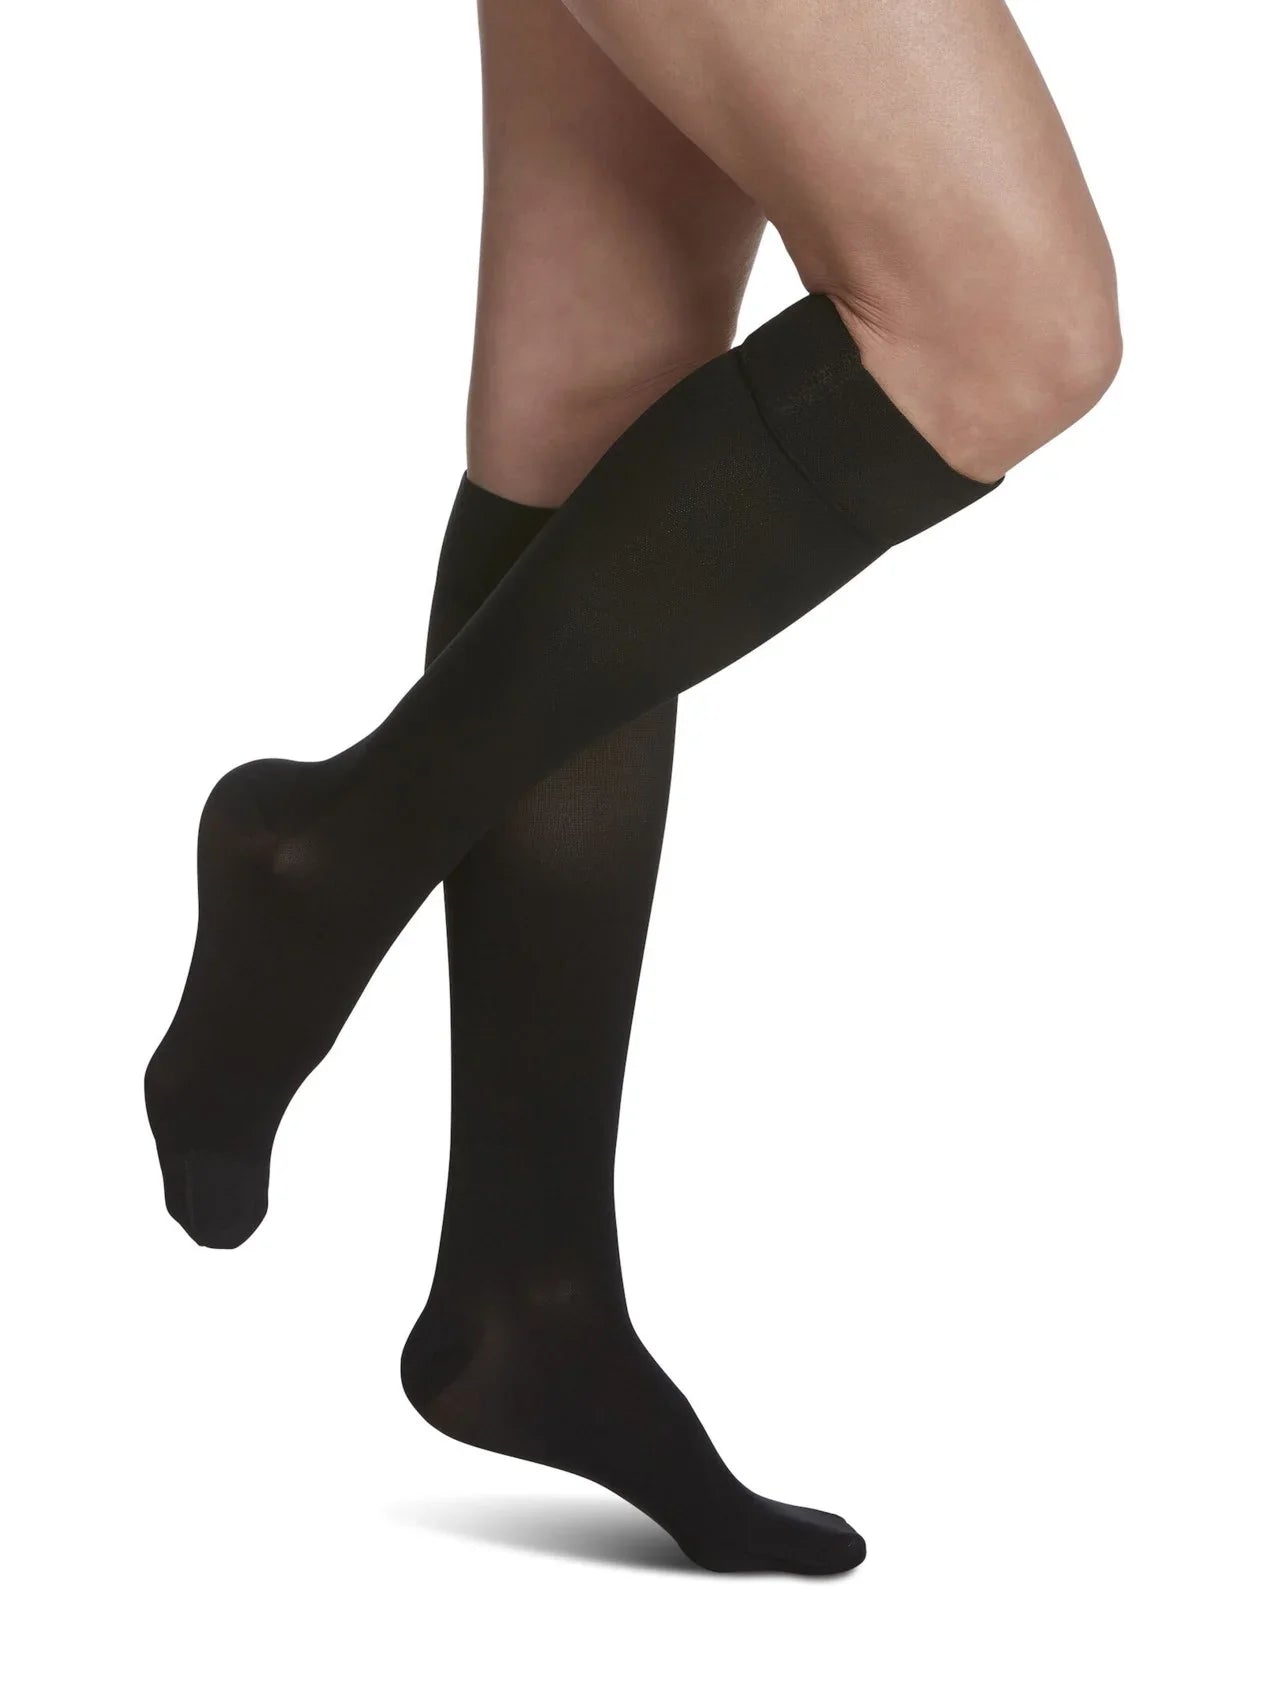 Sigvaris 860 Opaque Compression Socks 30-40 mmHg Calf High For Women Closed Toe